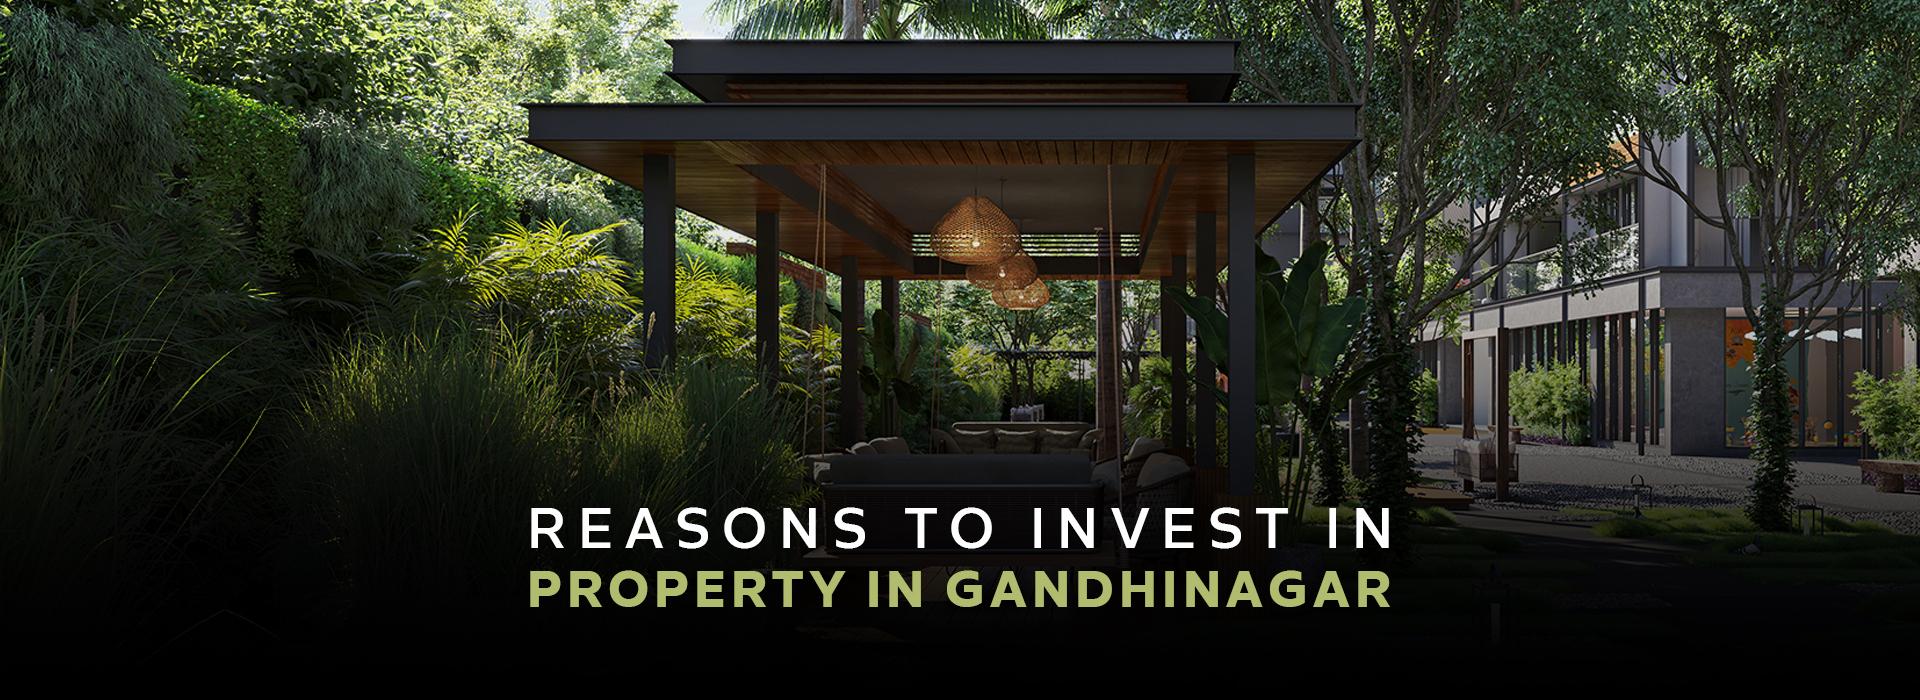 Reasons to Invest in Property in Gandhinagar